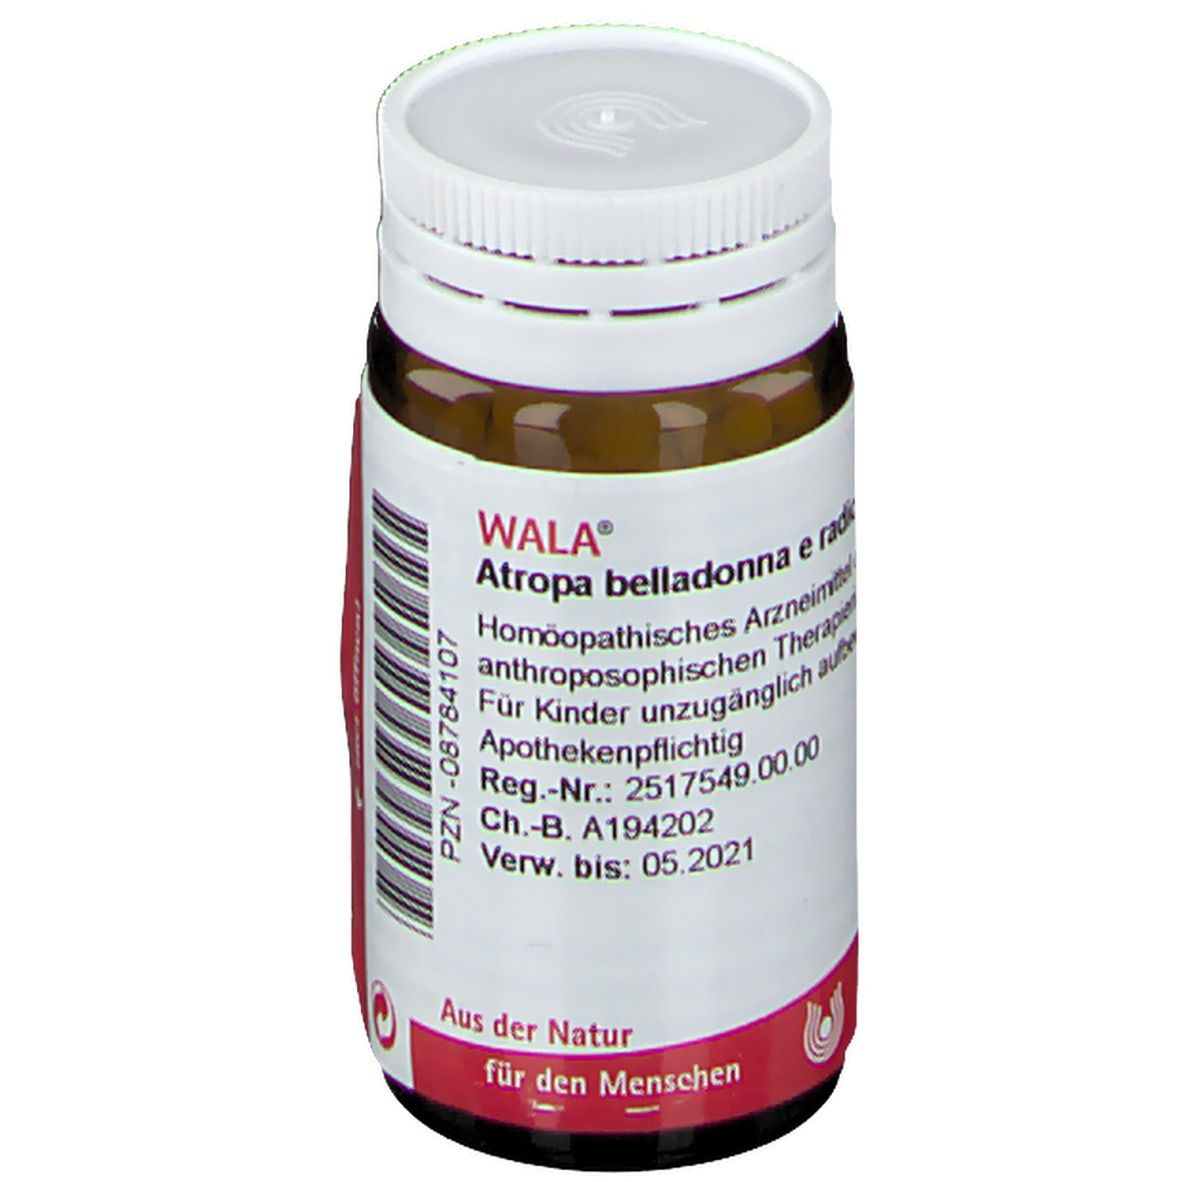 WALA® Atropa belladonna e radice D 15